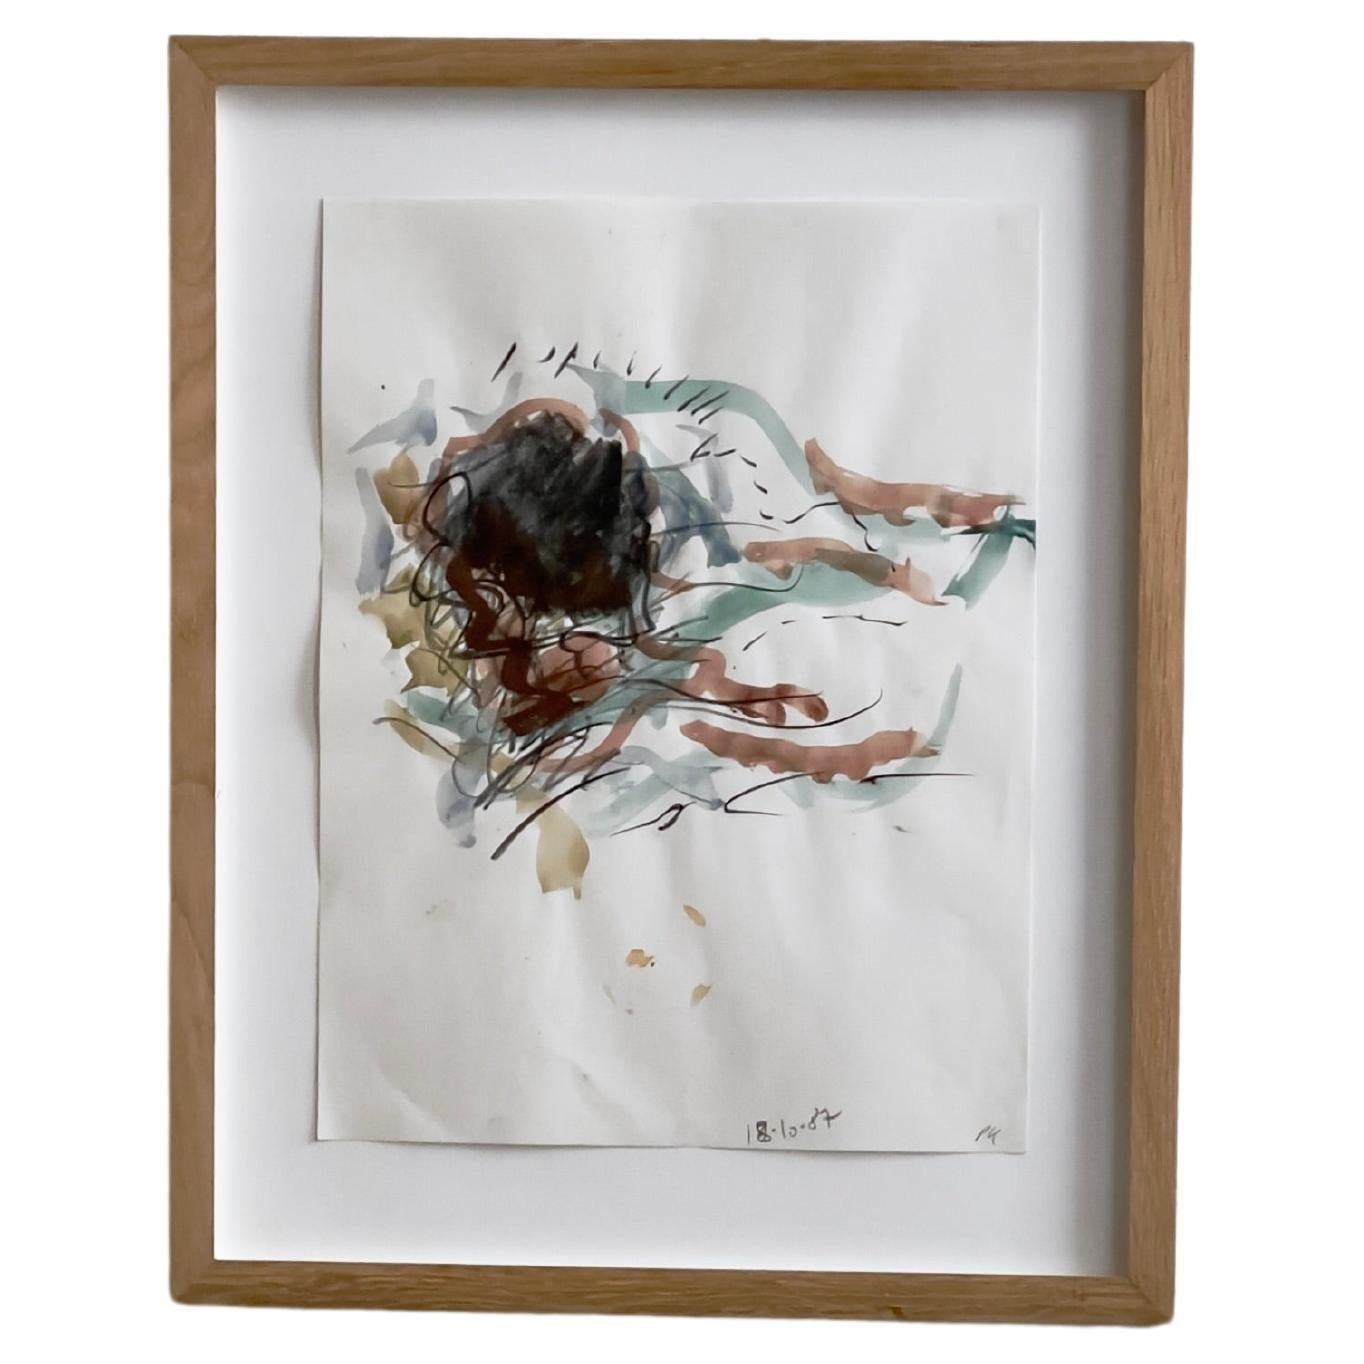 Unique work by Per Kirkeby, Untitled, 1987, Gouache 54 cm x 43 cm in oak frame